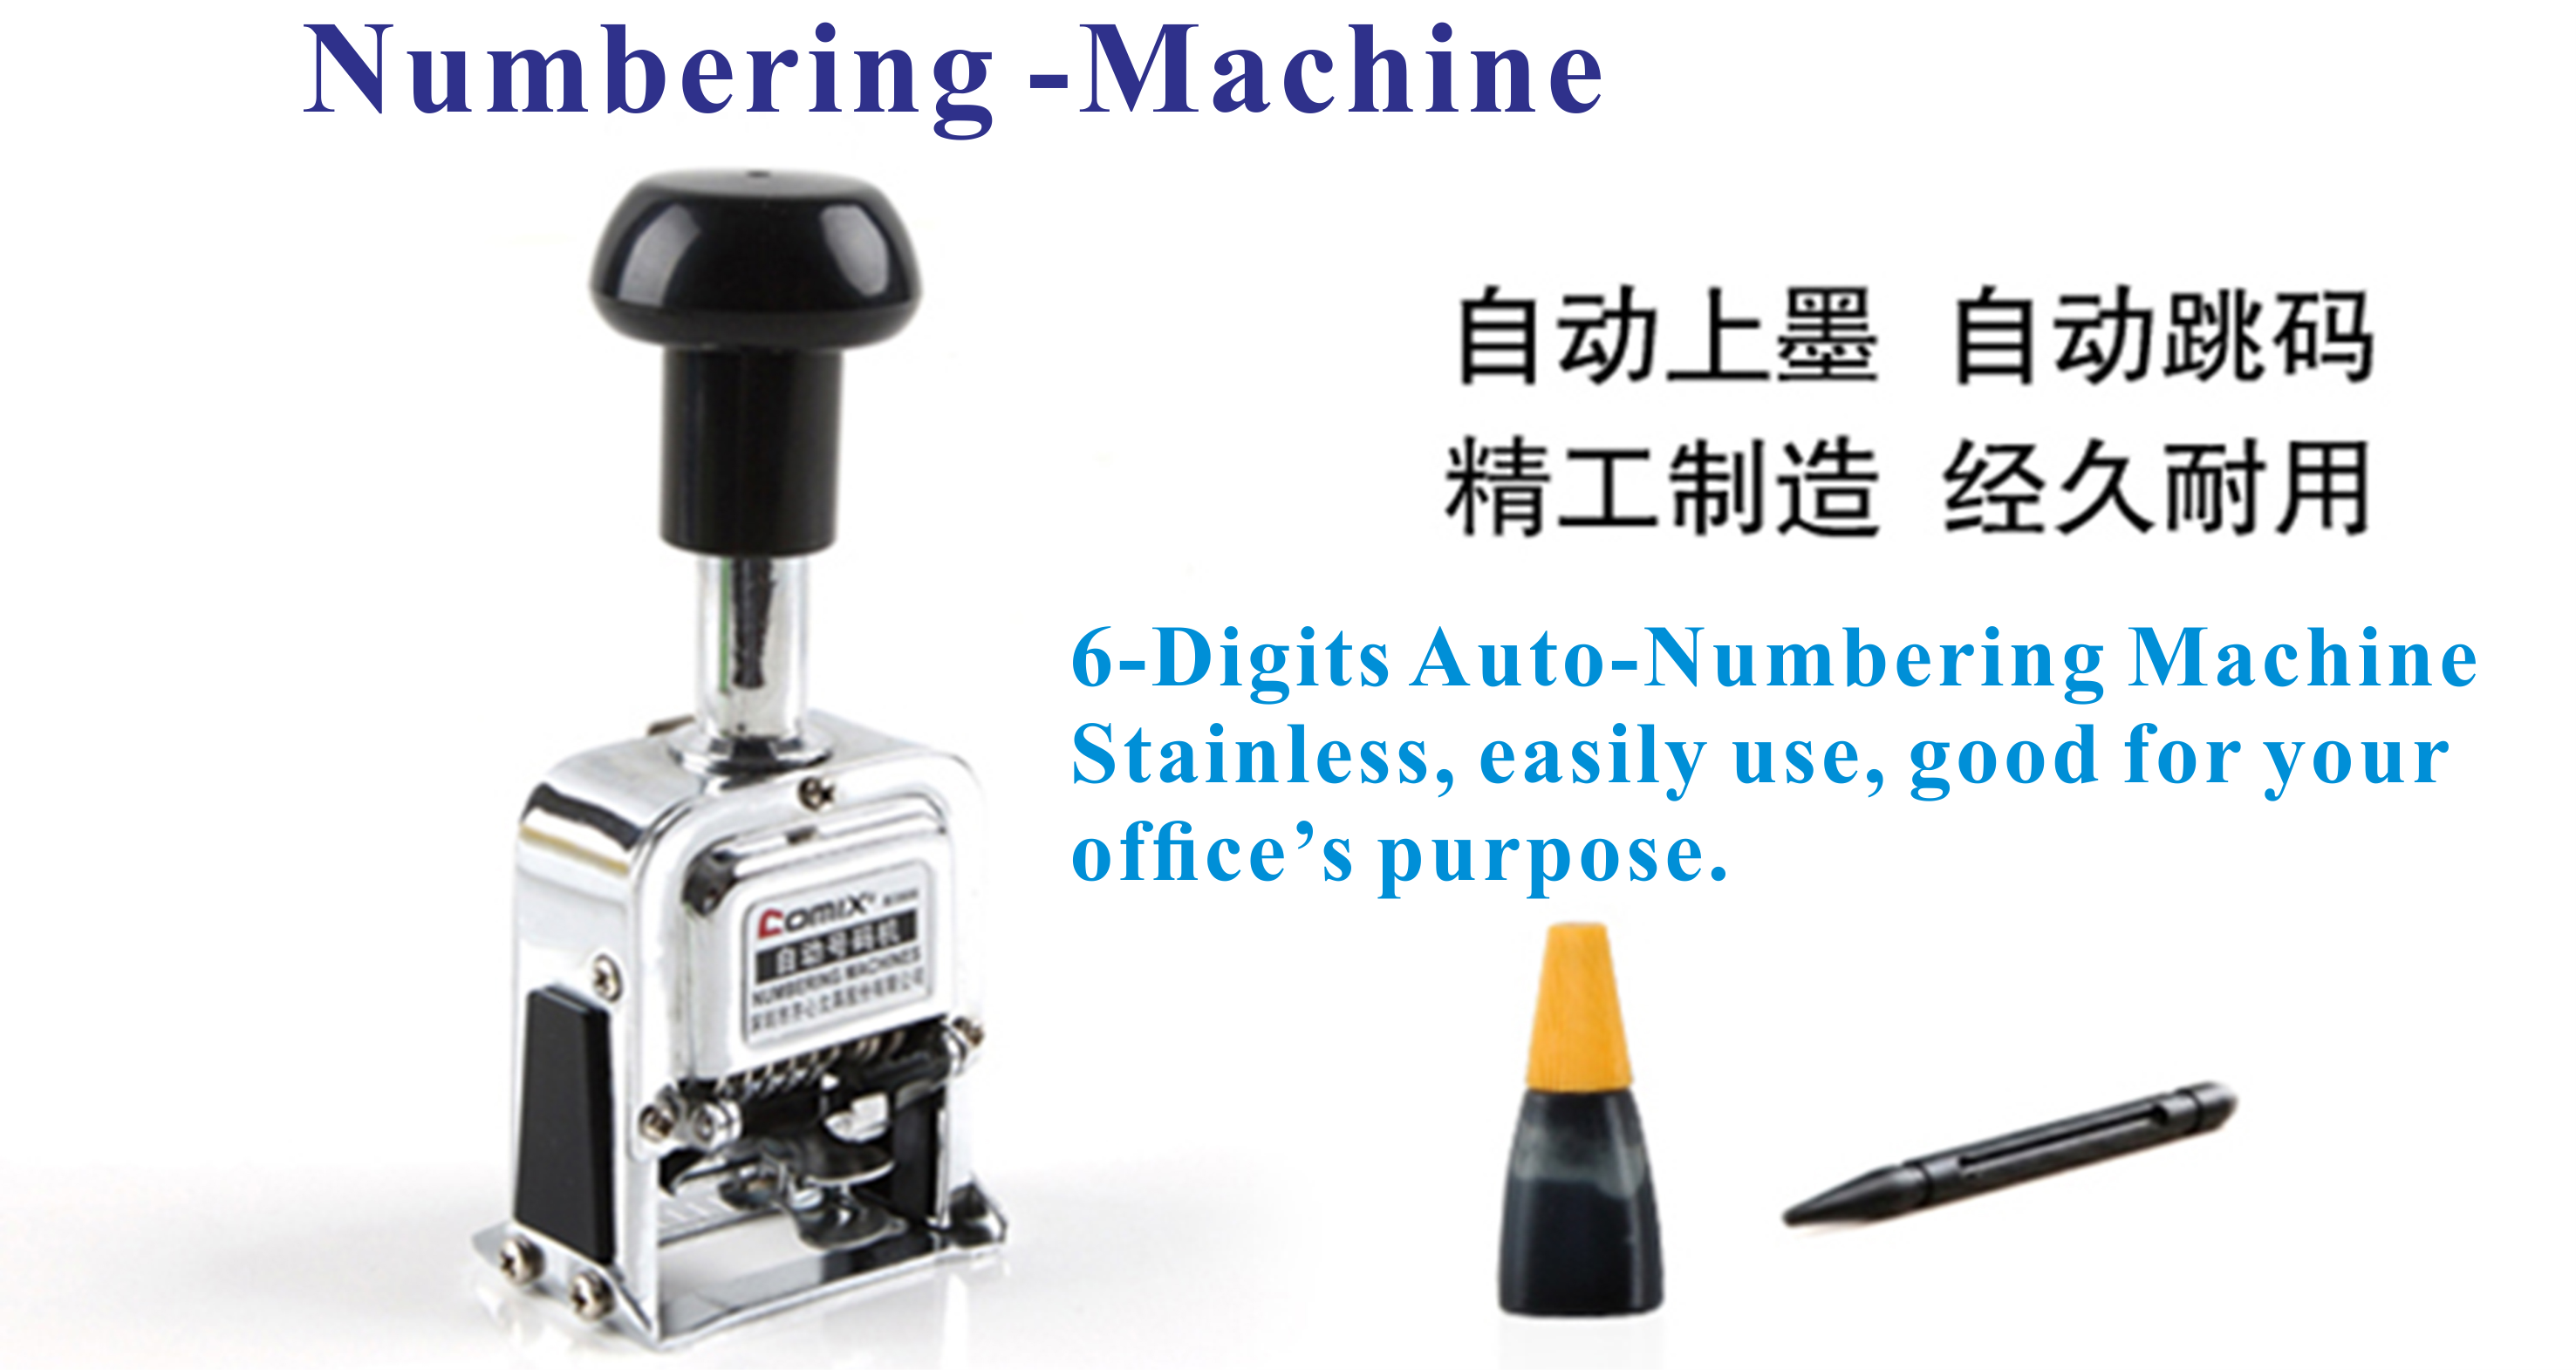 Numbering-Machine